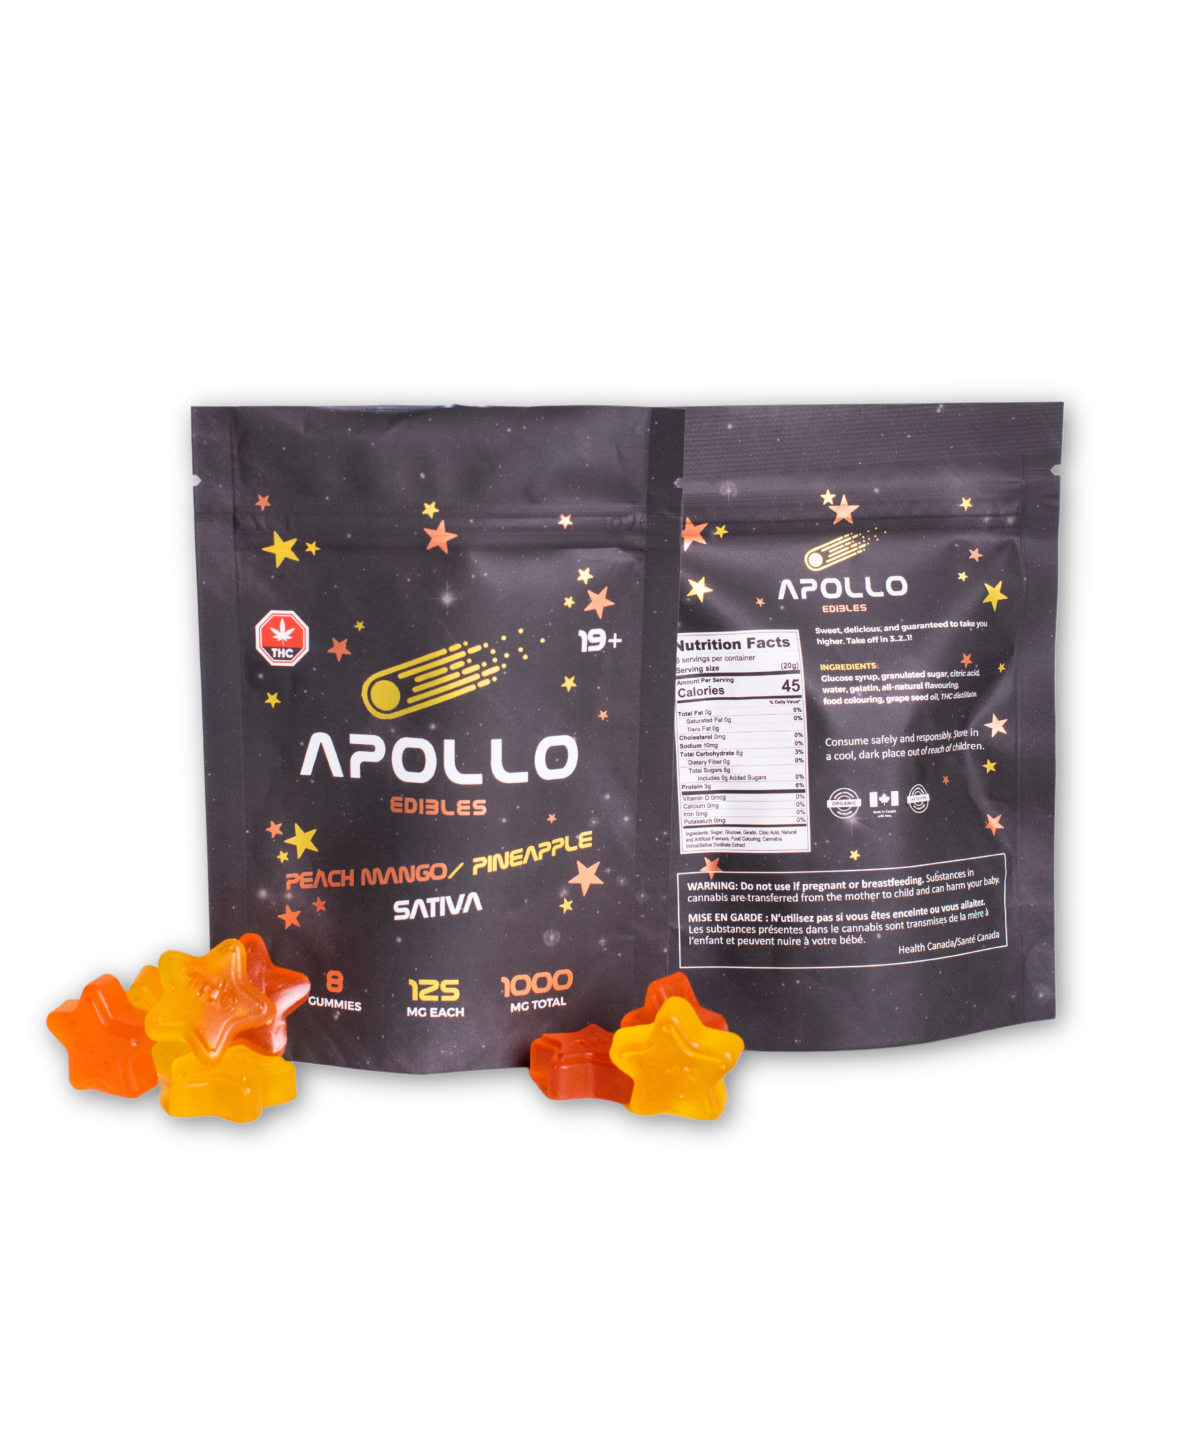 Buy Apollo Peach Mango/ Pineapple Shooting Star Gummies 1000MG THC (SATIVA) at MMJ Express Online Shop